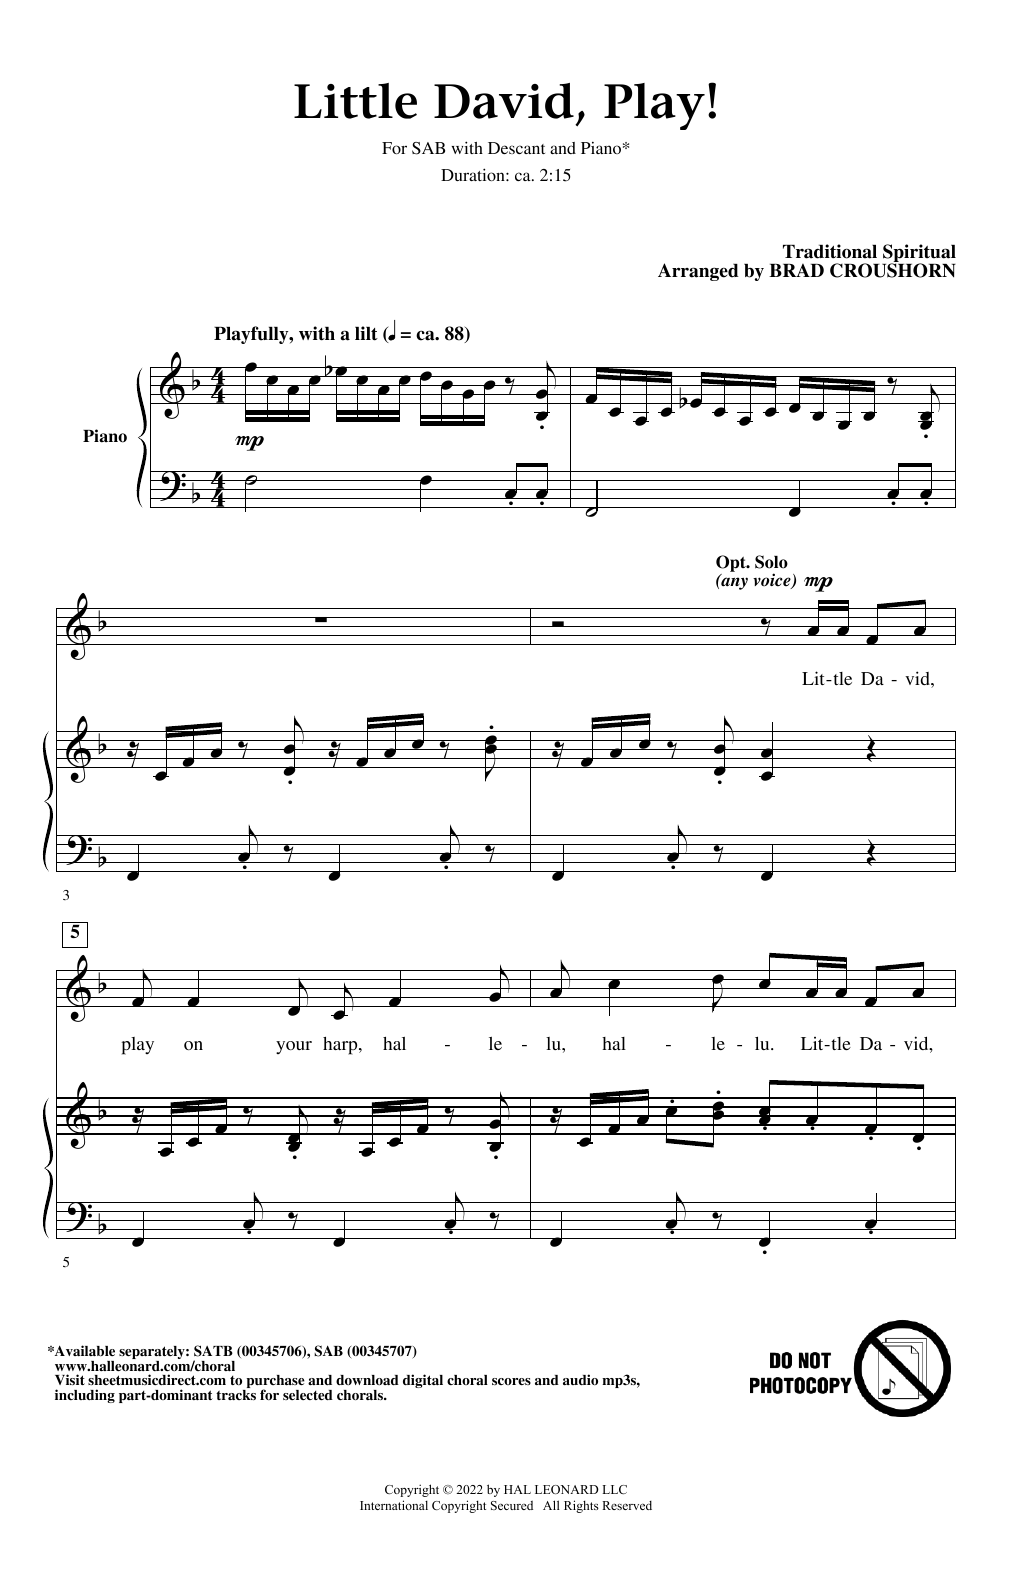 Traditional Spiritual Little David, Play! (arr. Brad Croushorn) Sheet Music Notes & Chords for SATB Choir - Download or Print PDF